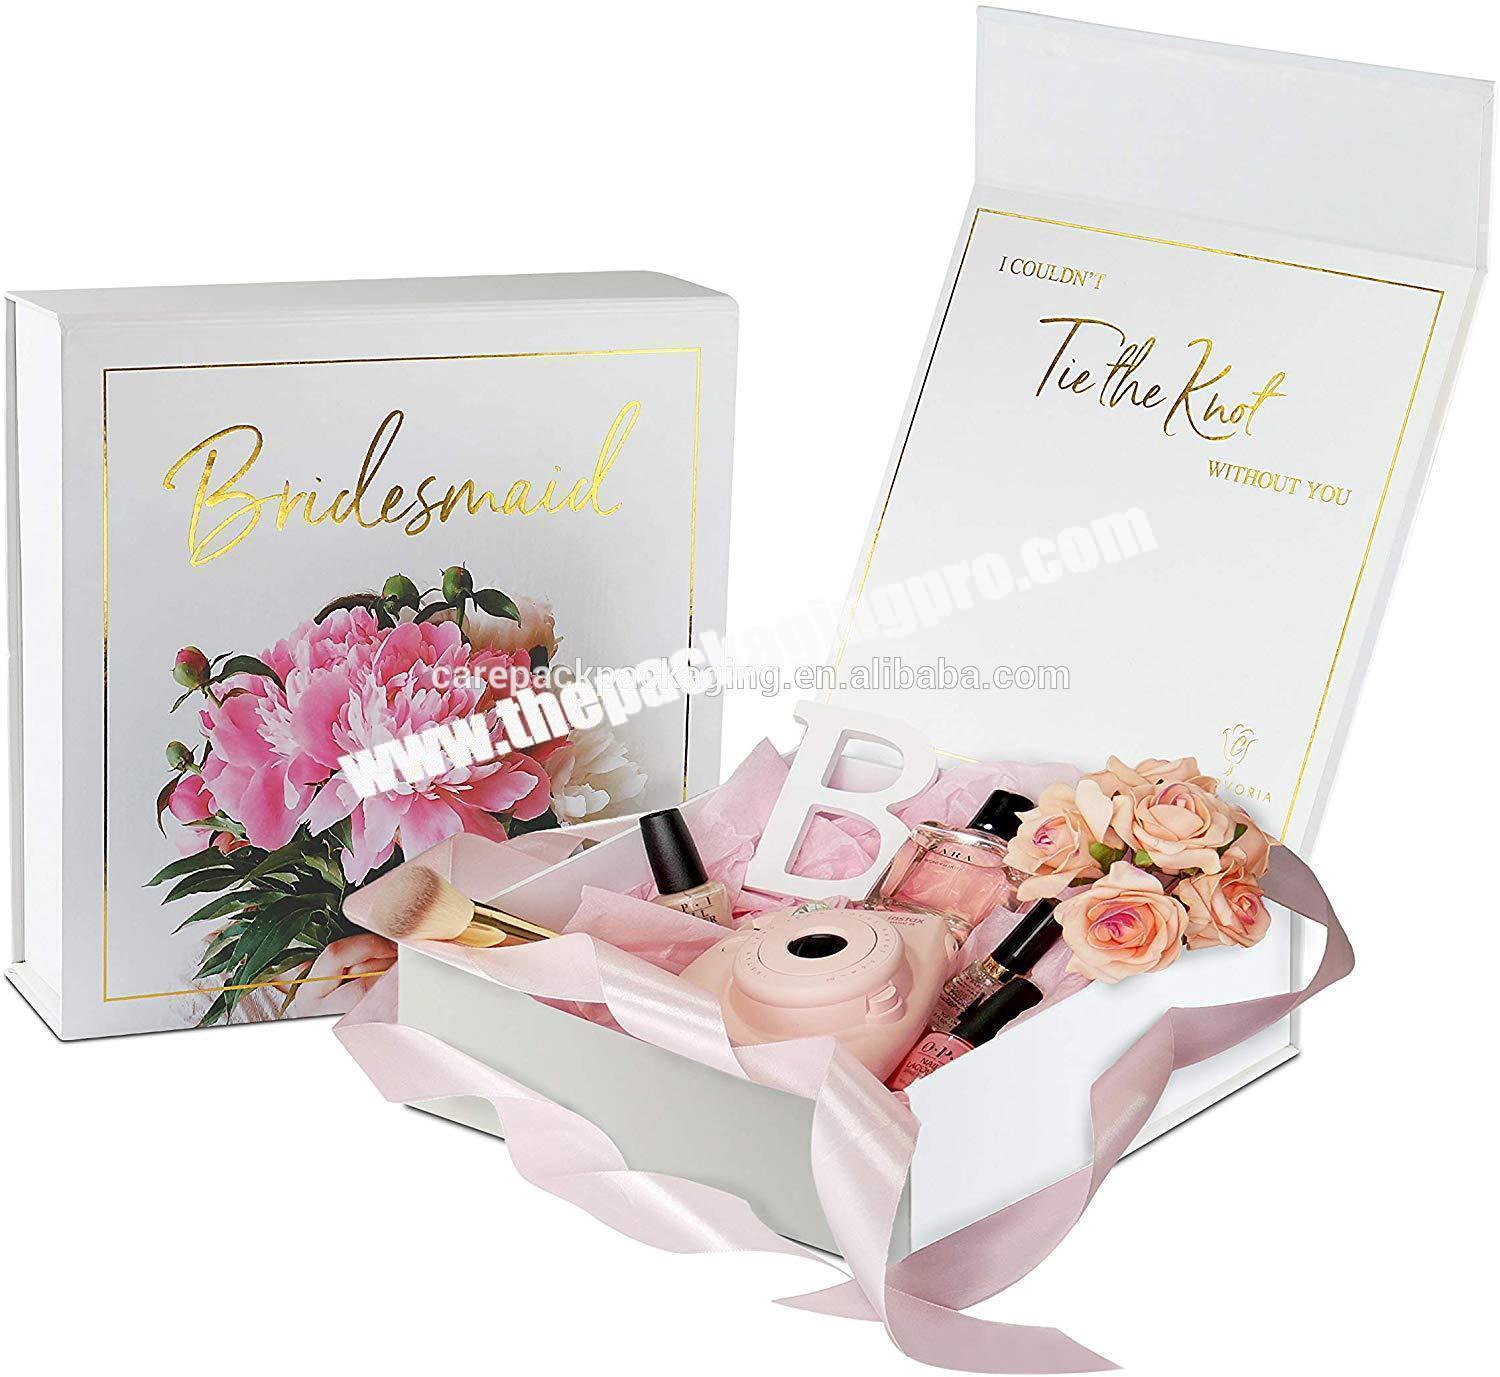 CarePack Custom Printed beauty and personal care hamper jakarta dress wedding packaging boxes